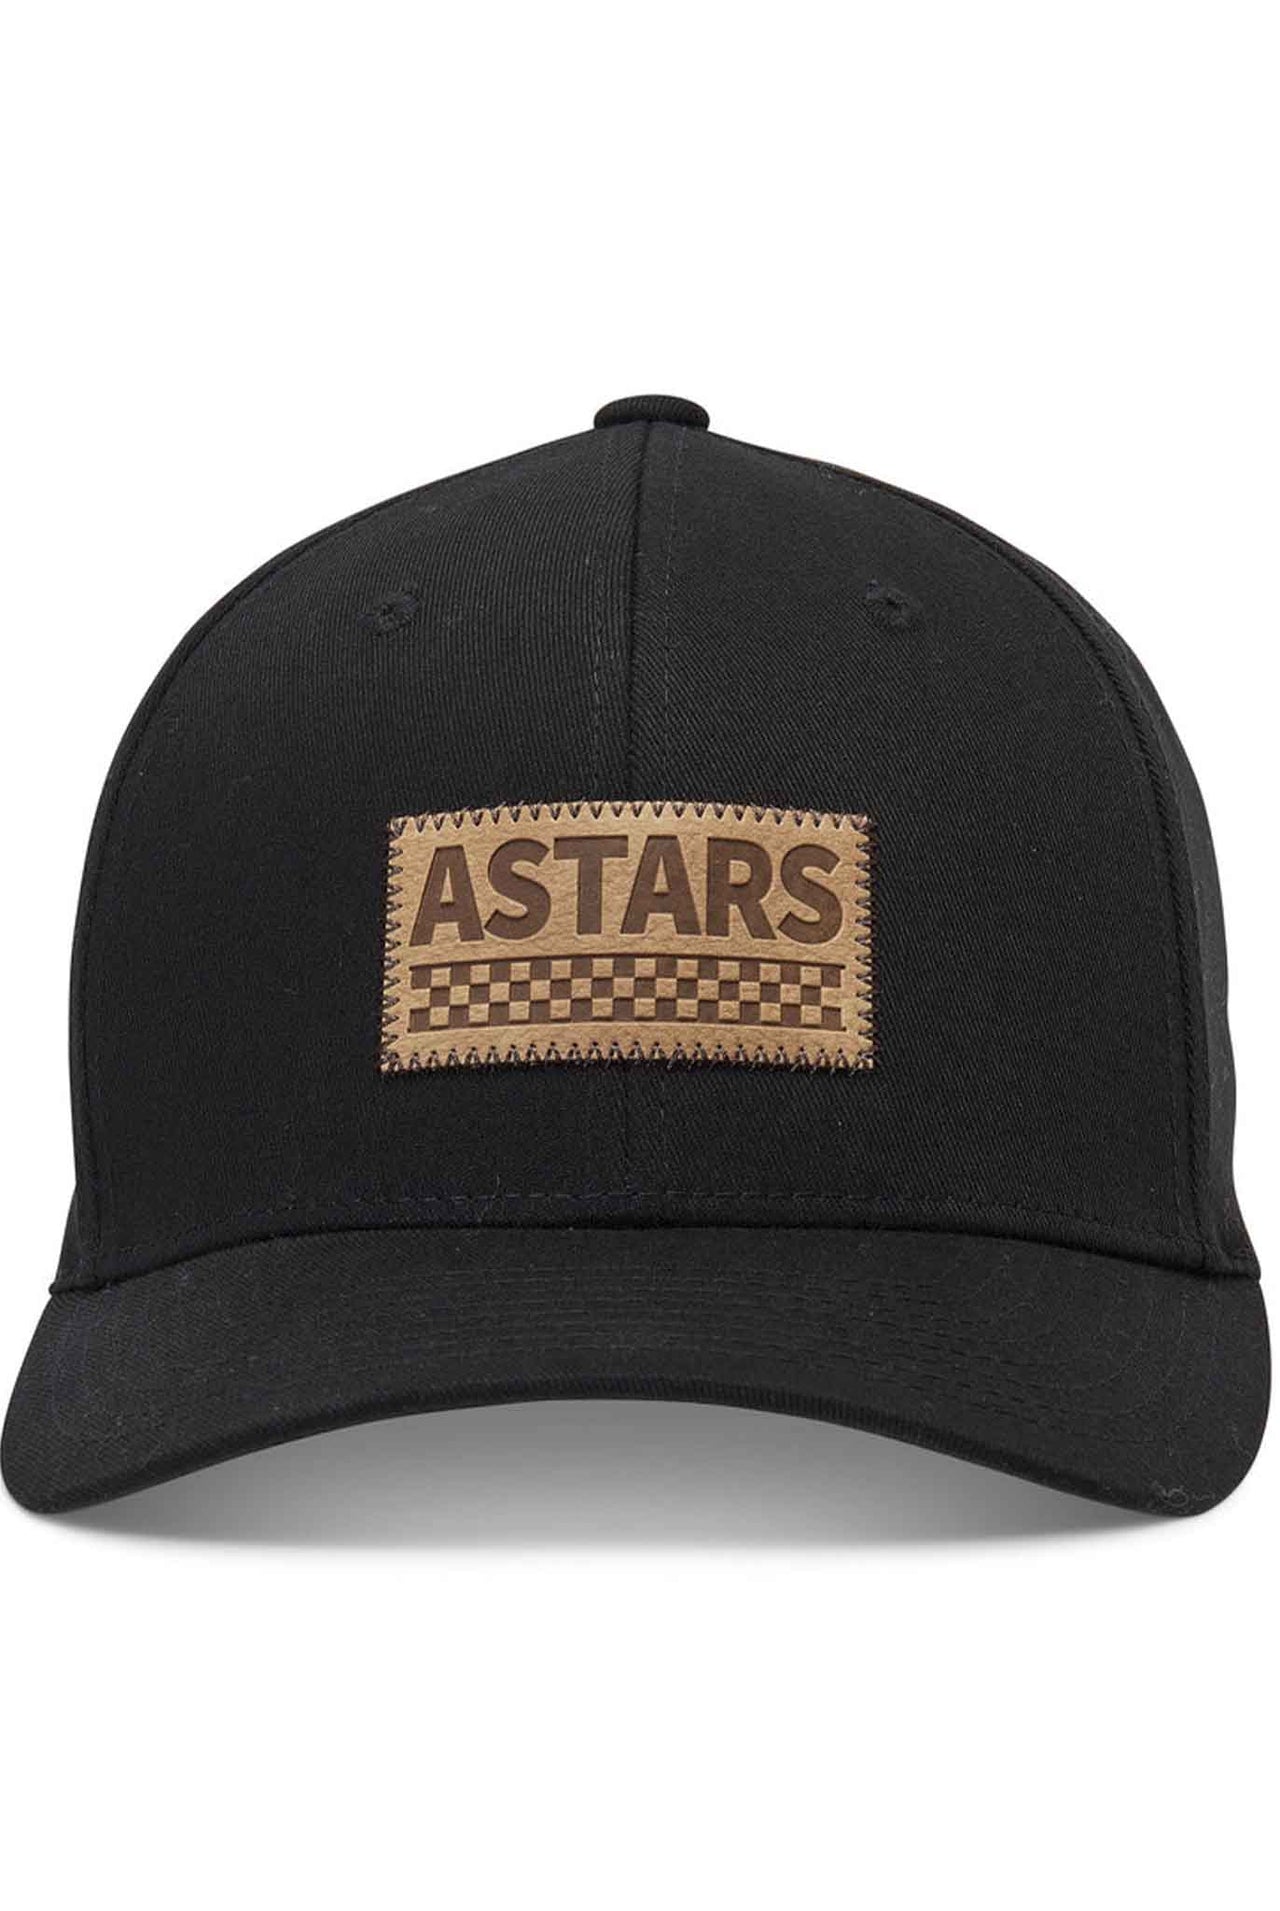 Gorra Alpinestars Hardy Hat